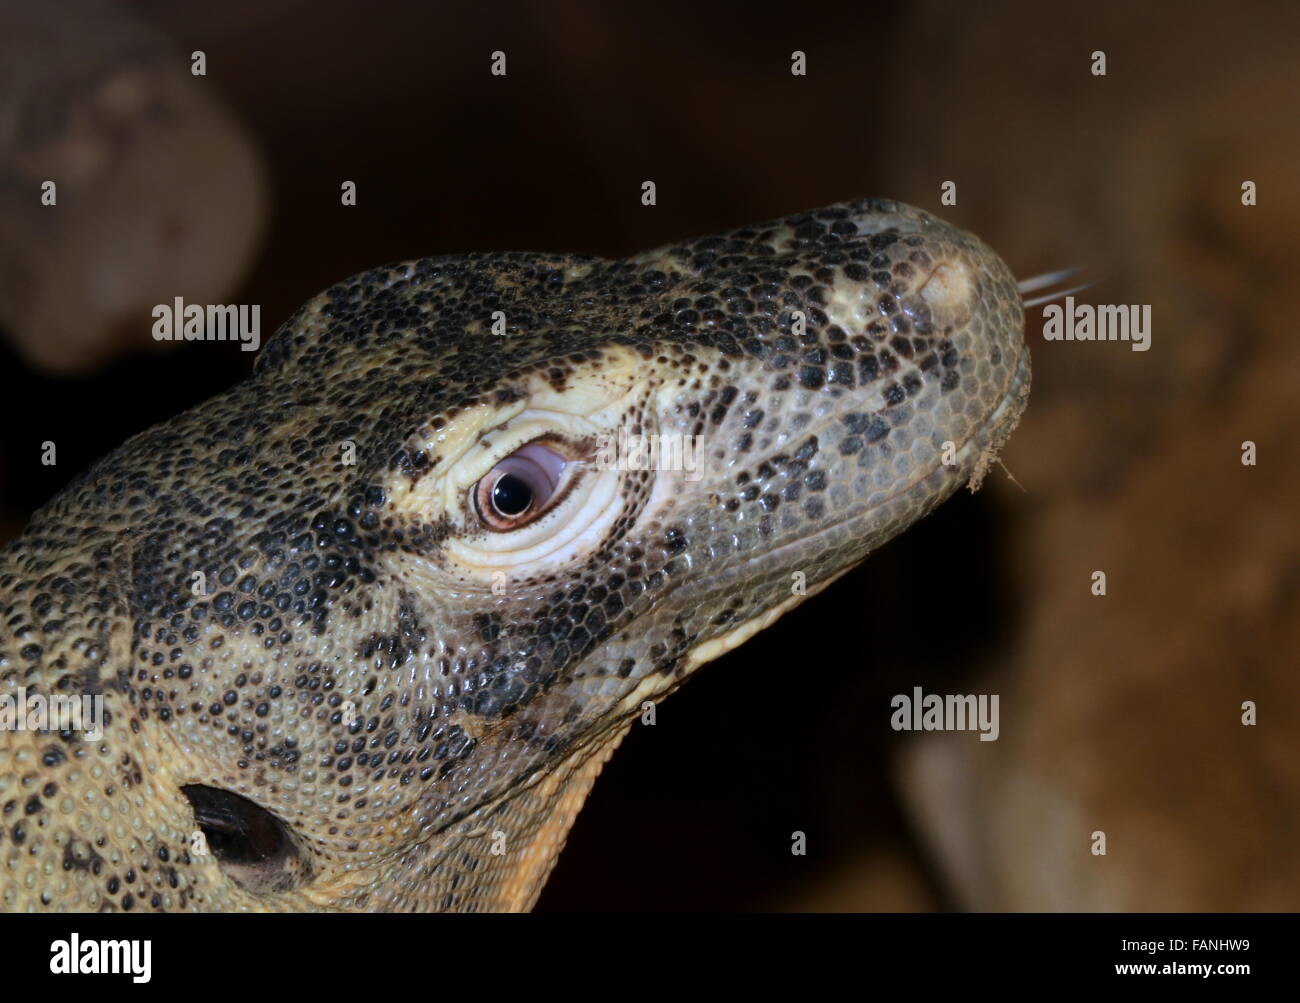 Closeup of the head of a Komodo dragon (Varanus komodoensis), tip of the forked tongue visible Stock Photo